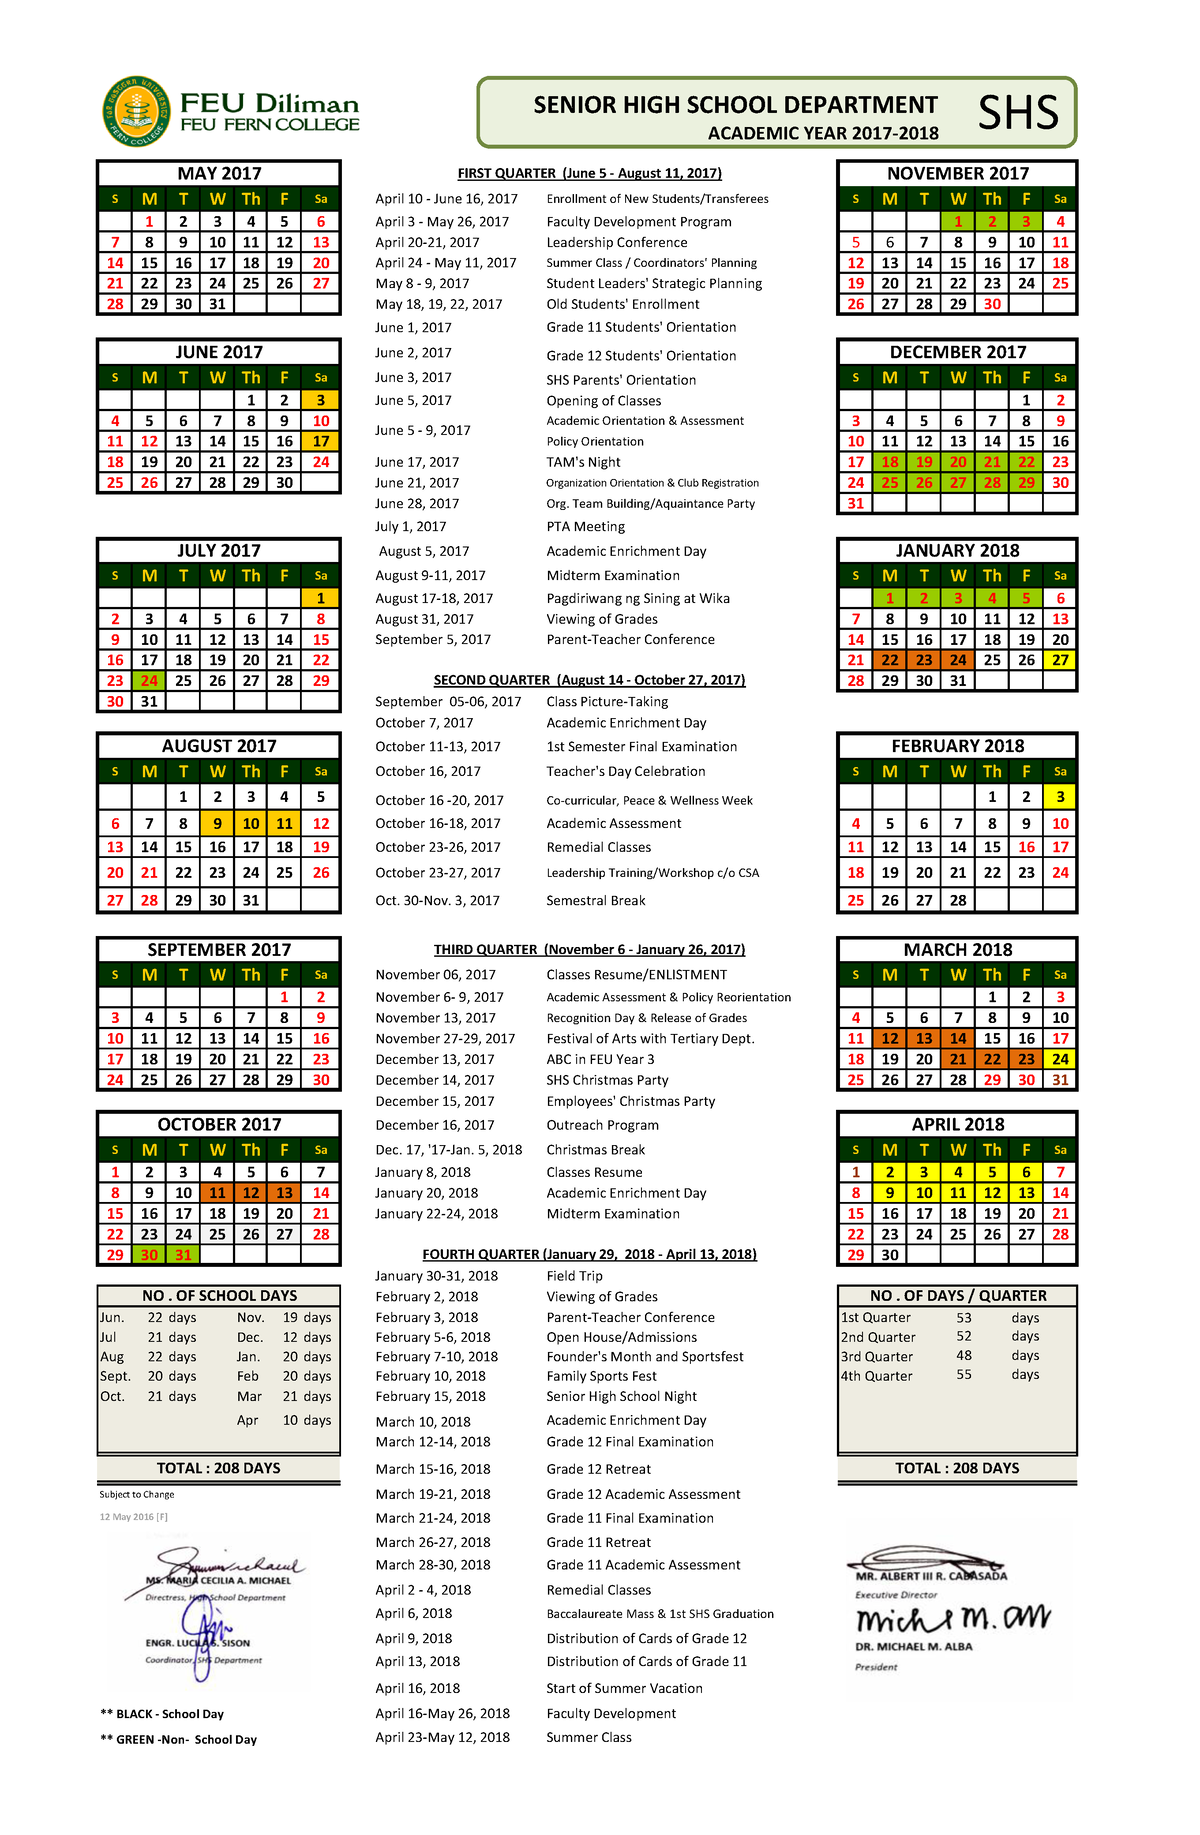 3 Approved Senior HIGH School DEPT School Calendar AY 2017 2018 01